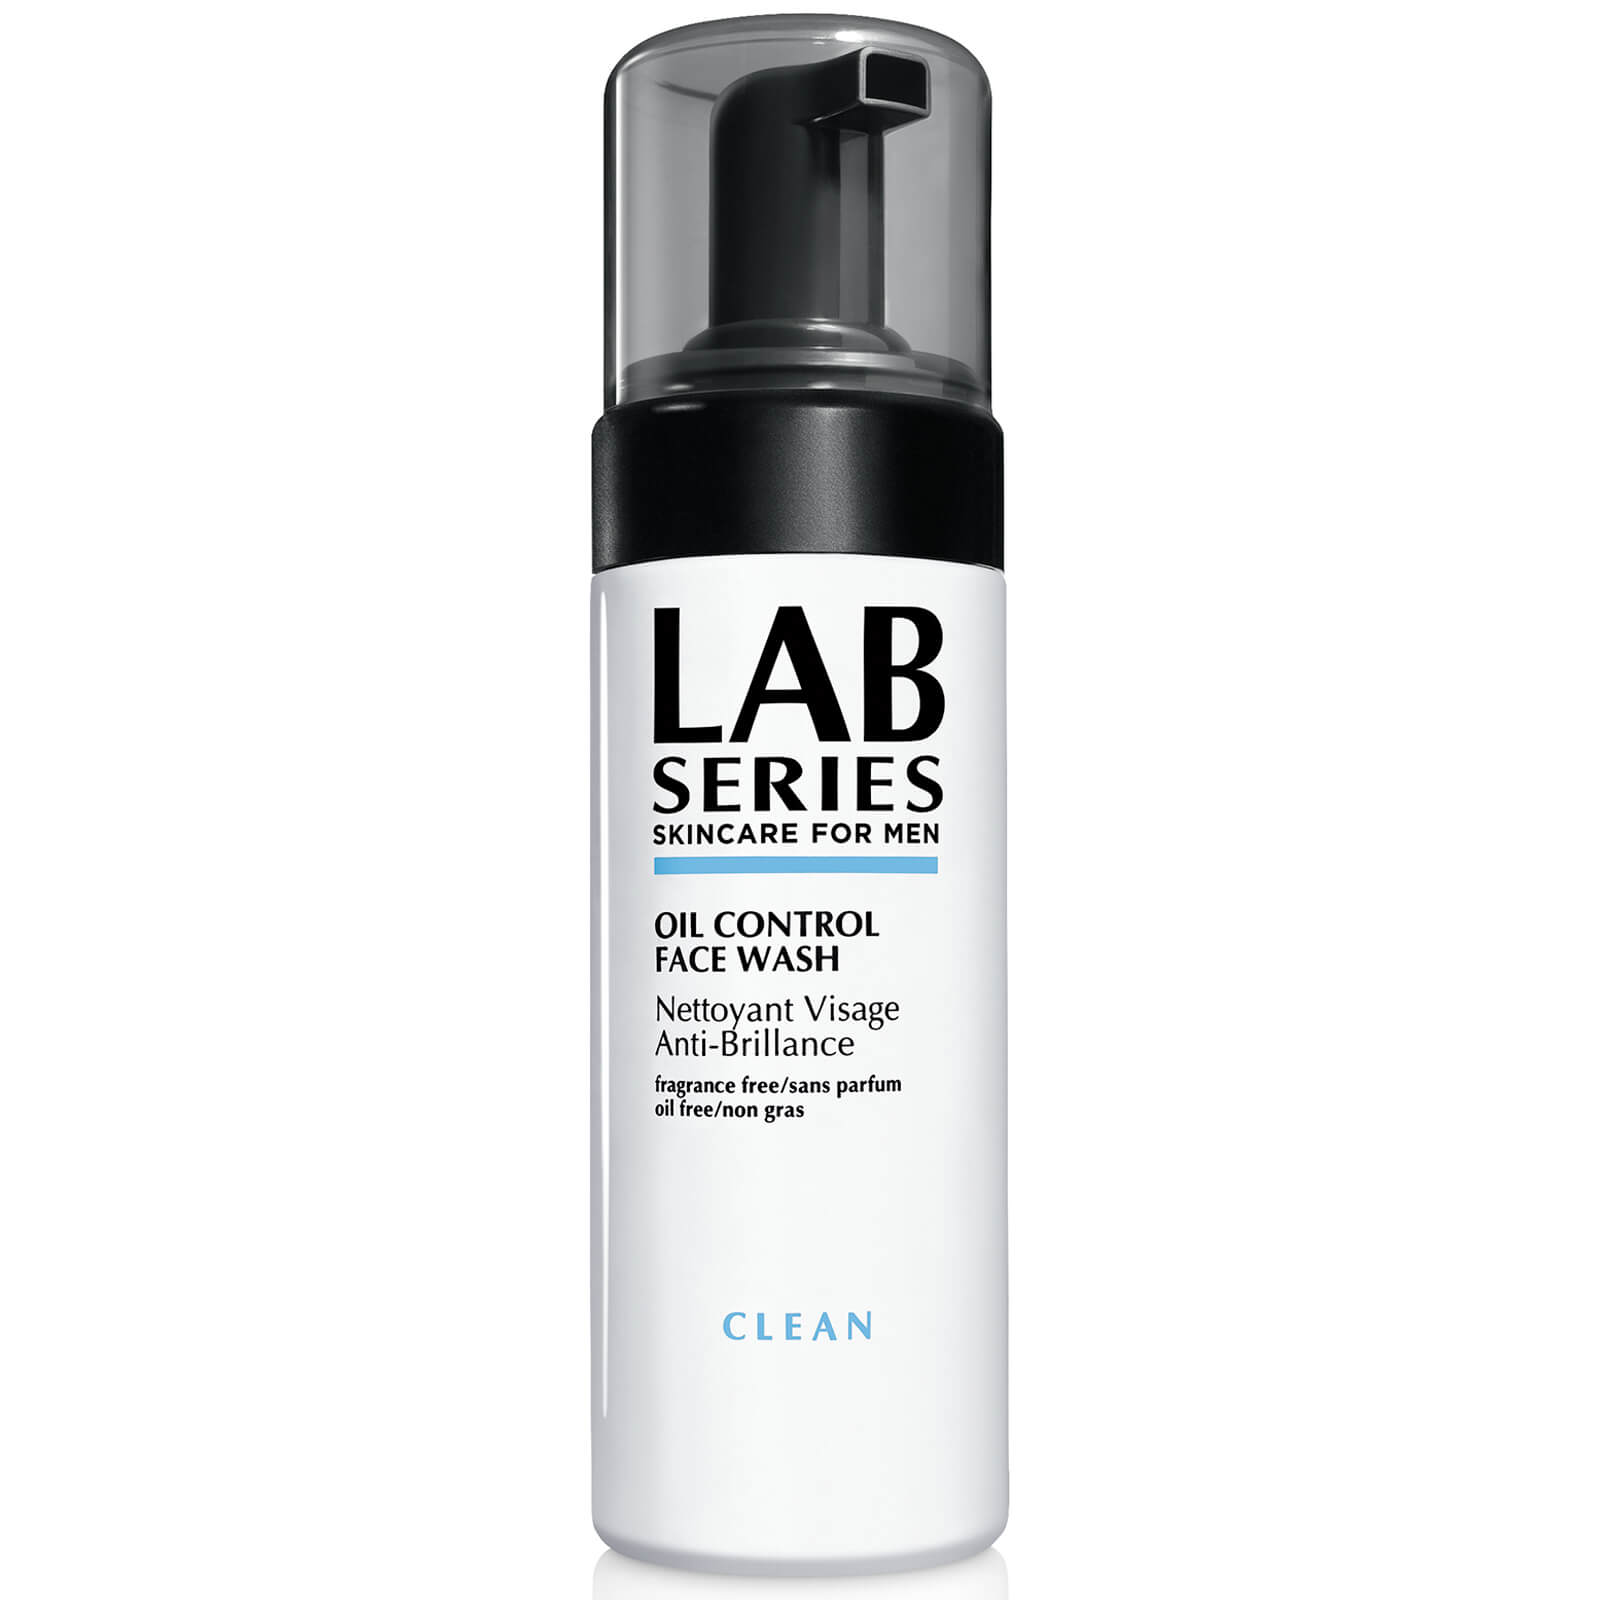 Gel Facial Oil Control Skincare For Men de Lab Series (125 ml)